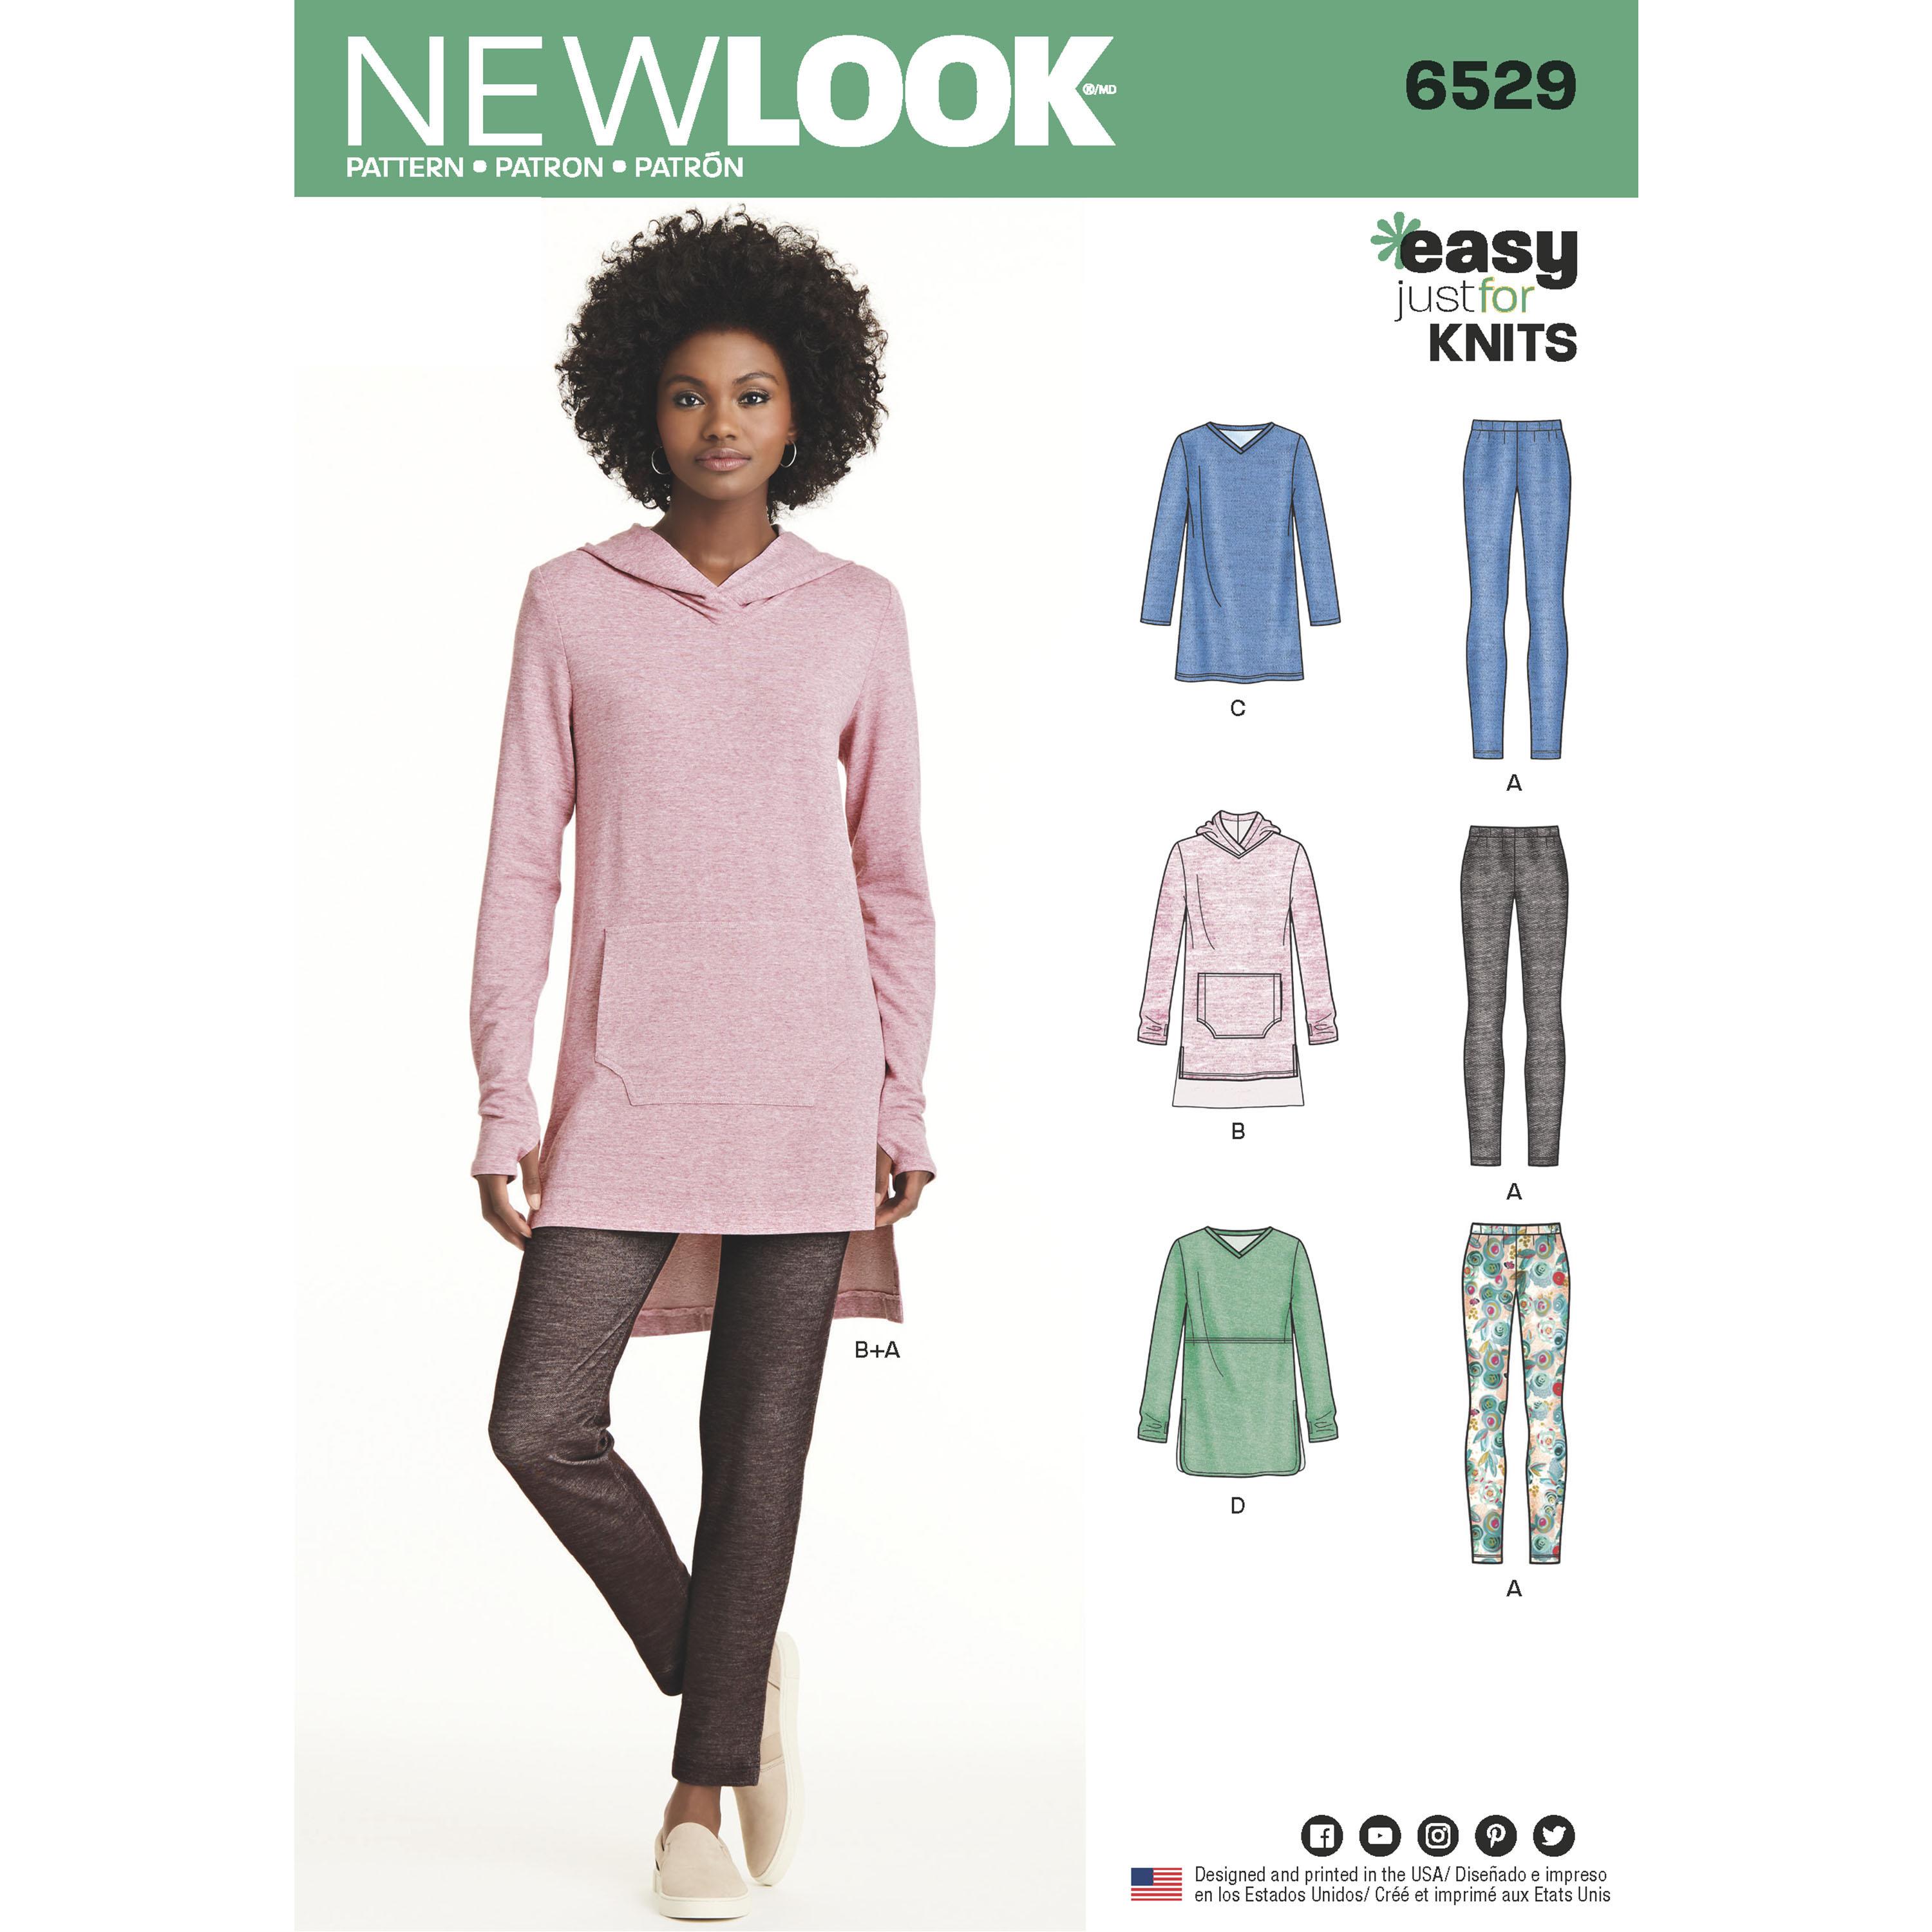 NewLook N6529 Women's Knit Tunics and Leggings